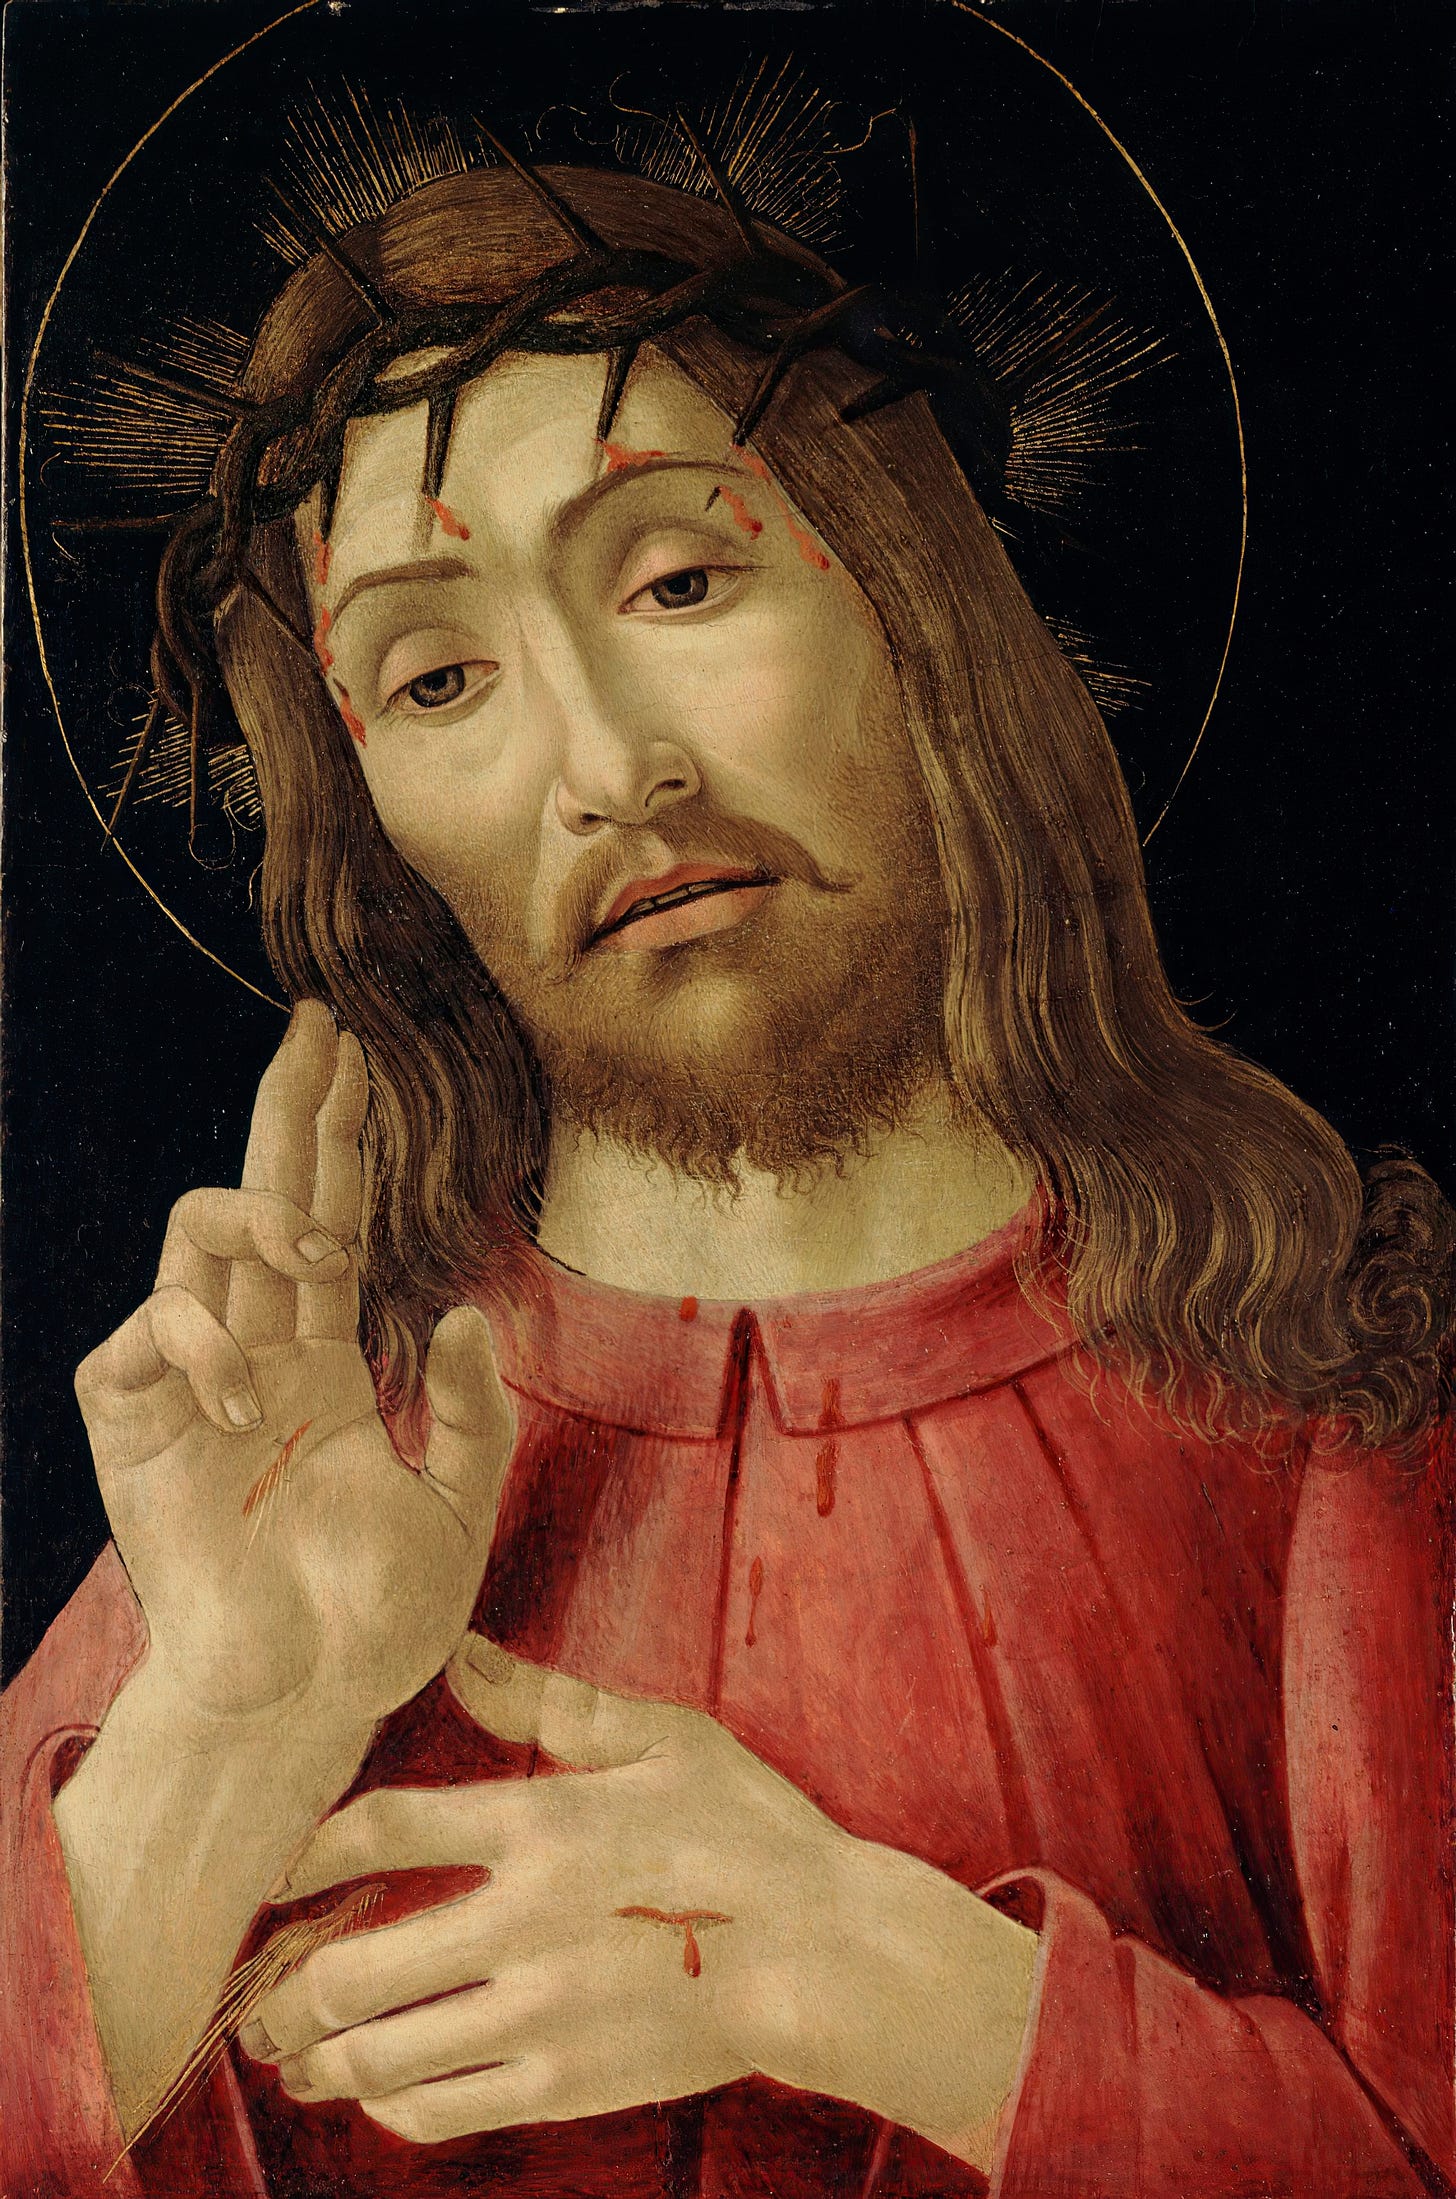 The Resurrected Christ (ca. 1480)